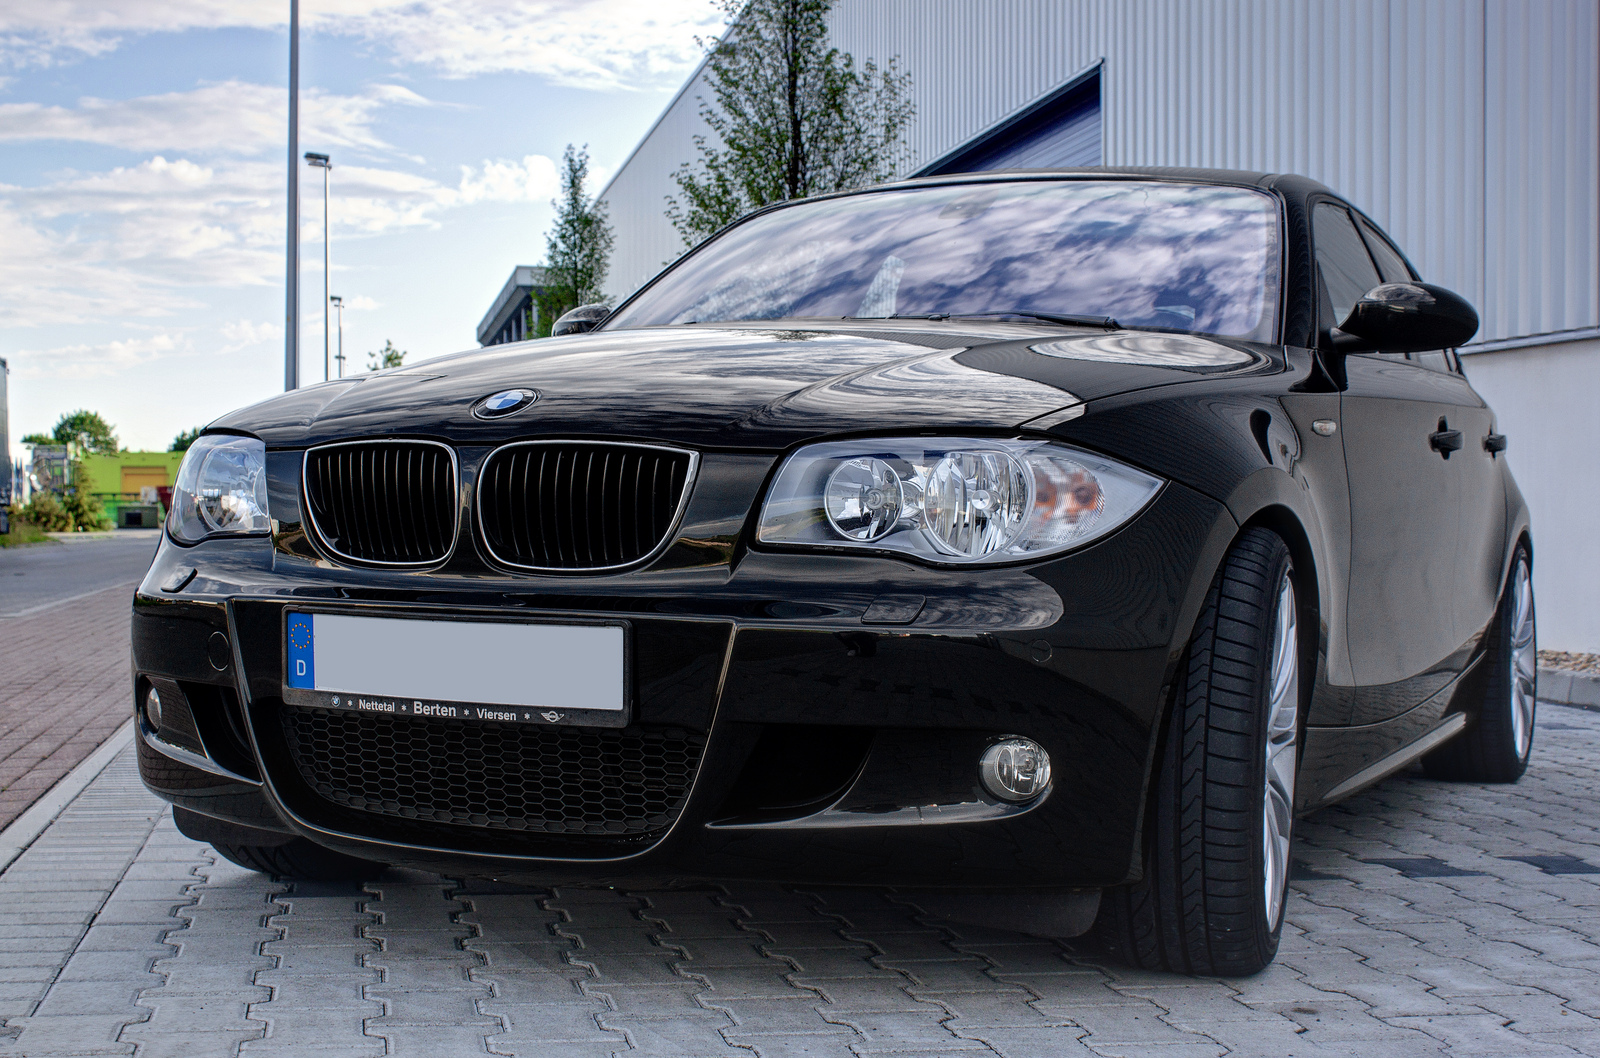 BMW 120d e87 M-Paket | Flickr - Photo Sharing!